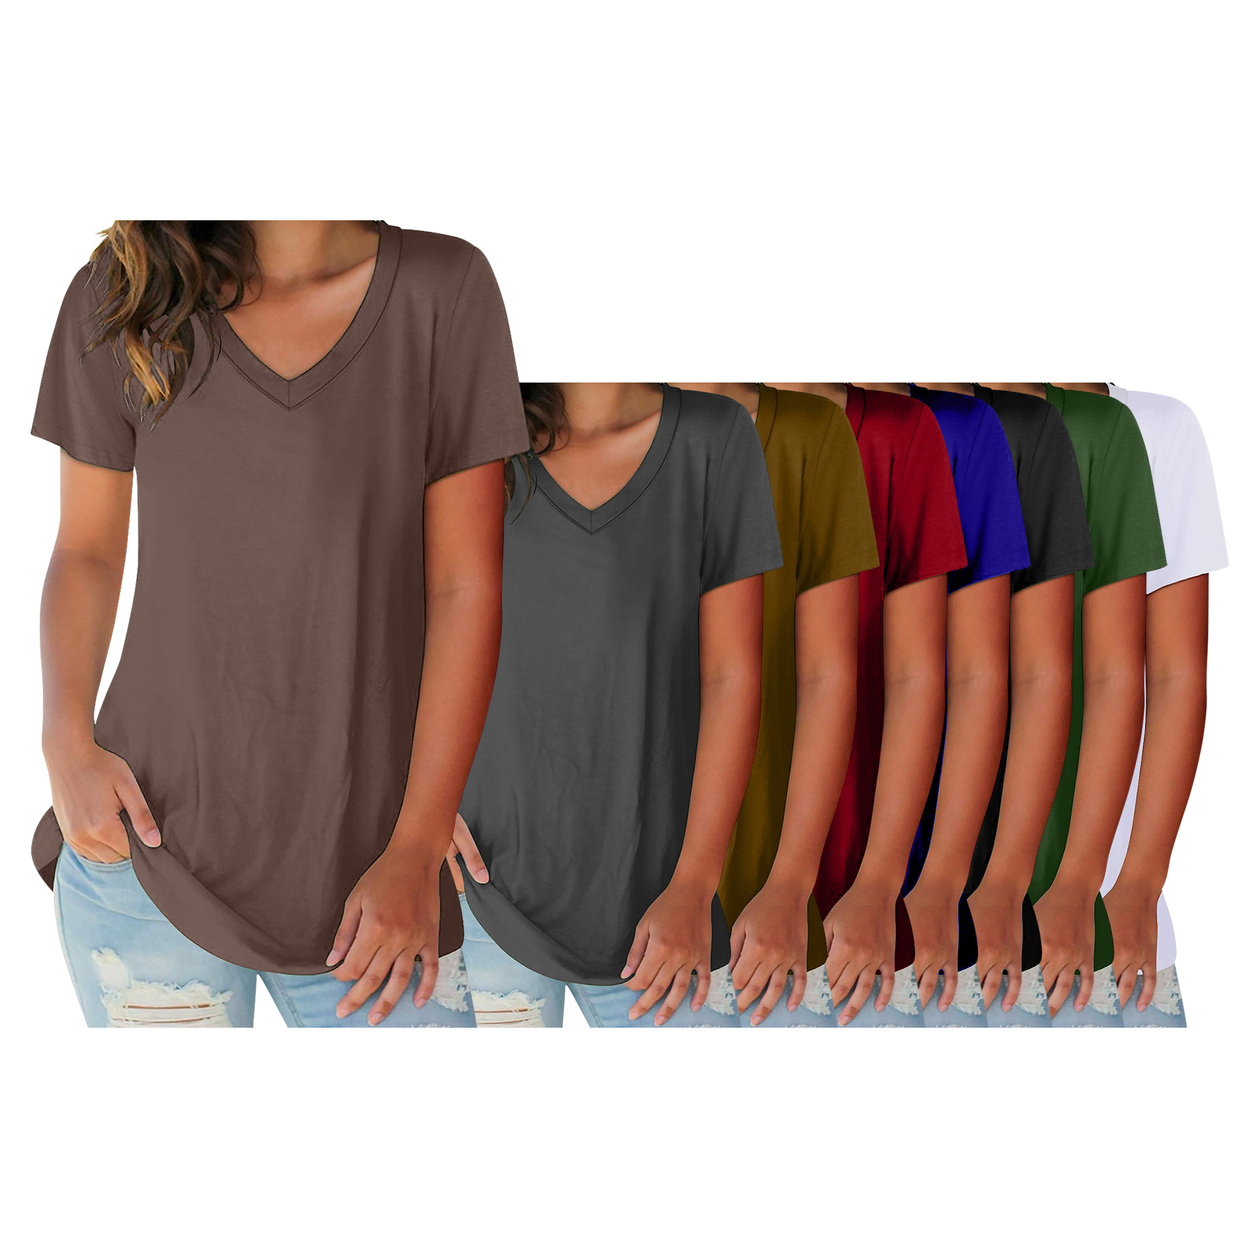 3-Pack: Women's Ultra Soft Smooth Cotton Blend Basic V-Neck Short Sleeve Shirts - Black, White Mustard, Large